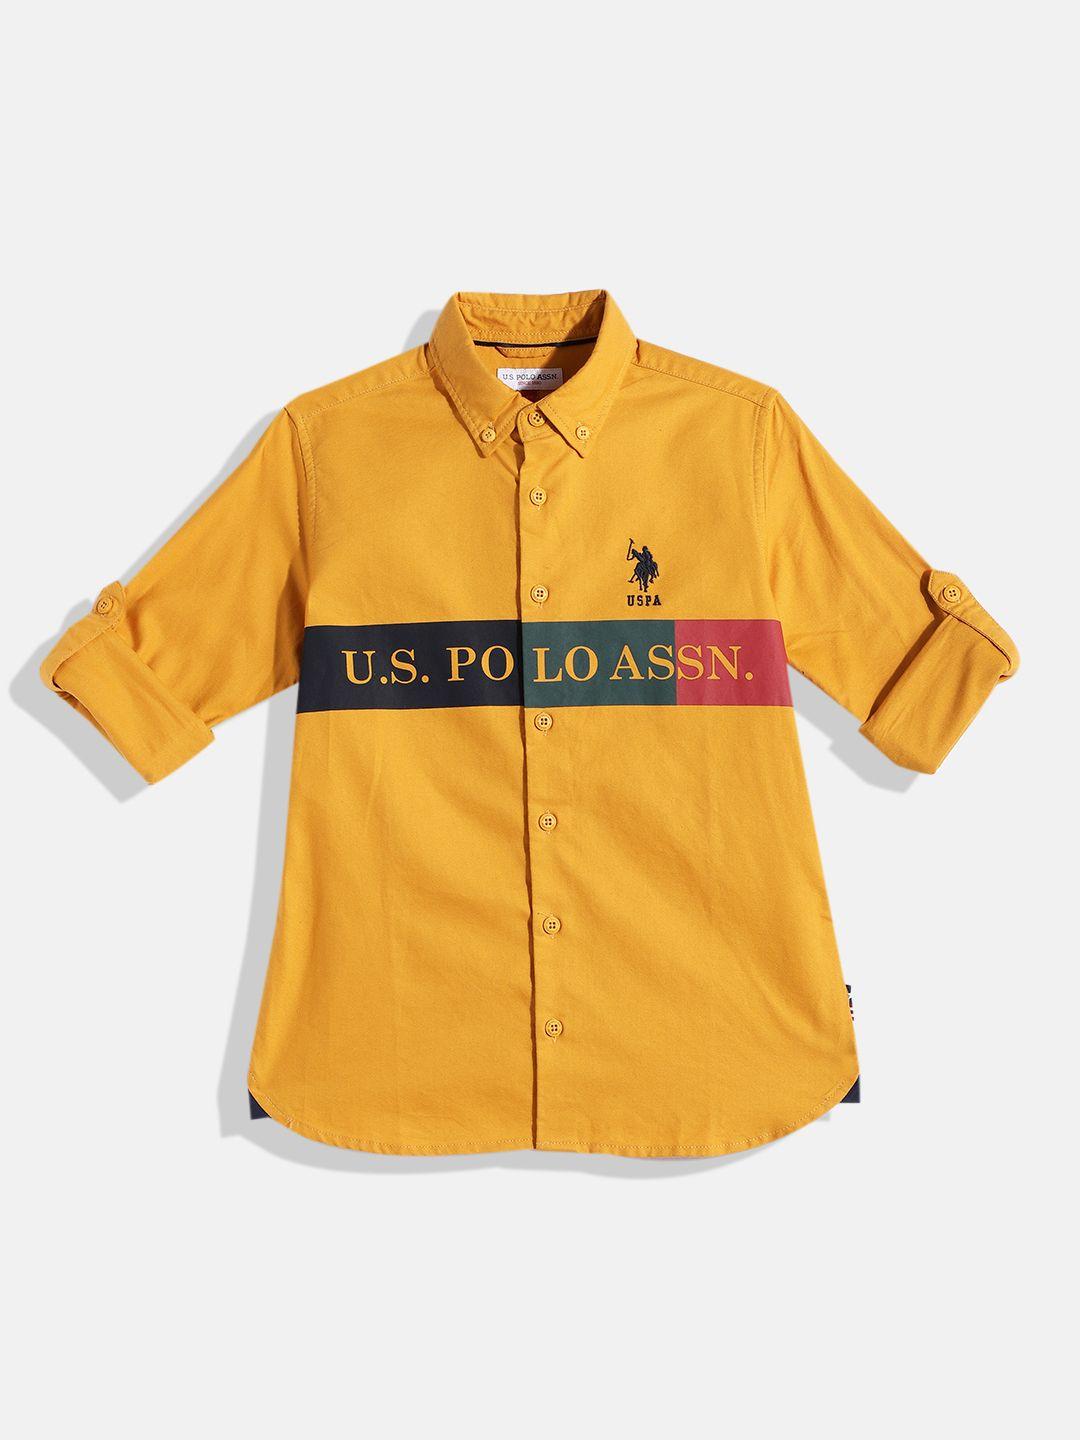 u.s. polo assn. kids boys brand logo printed opaque pure cotton casual shirt